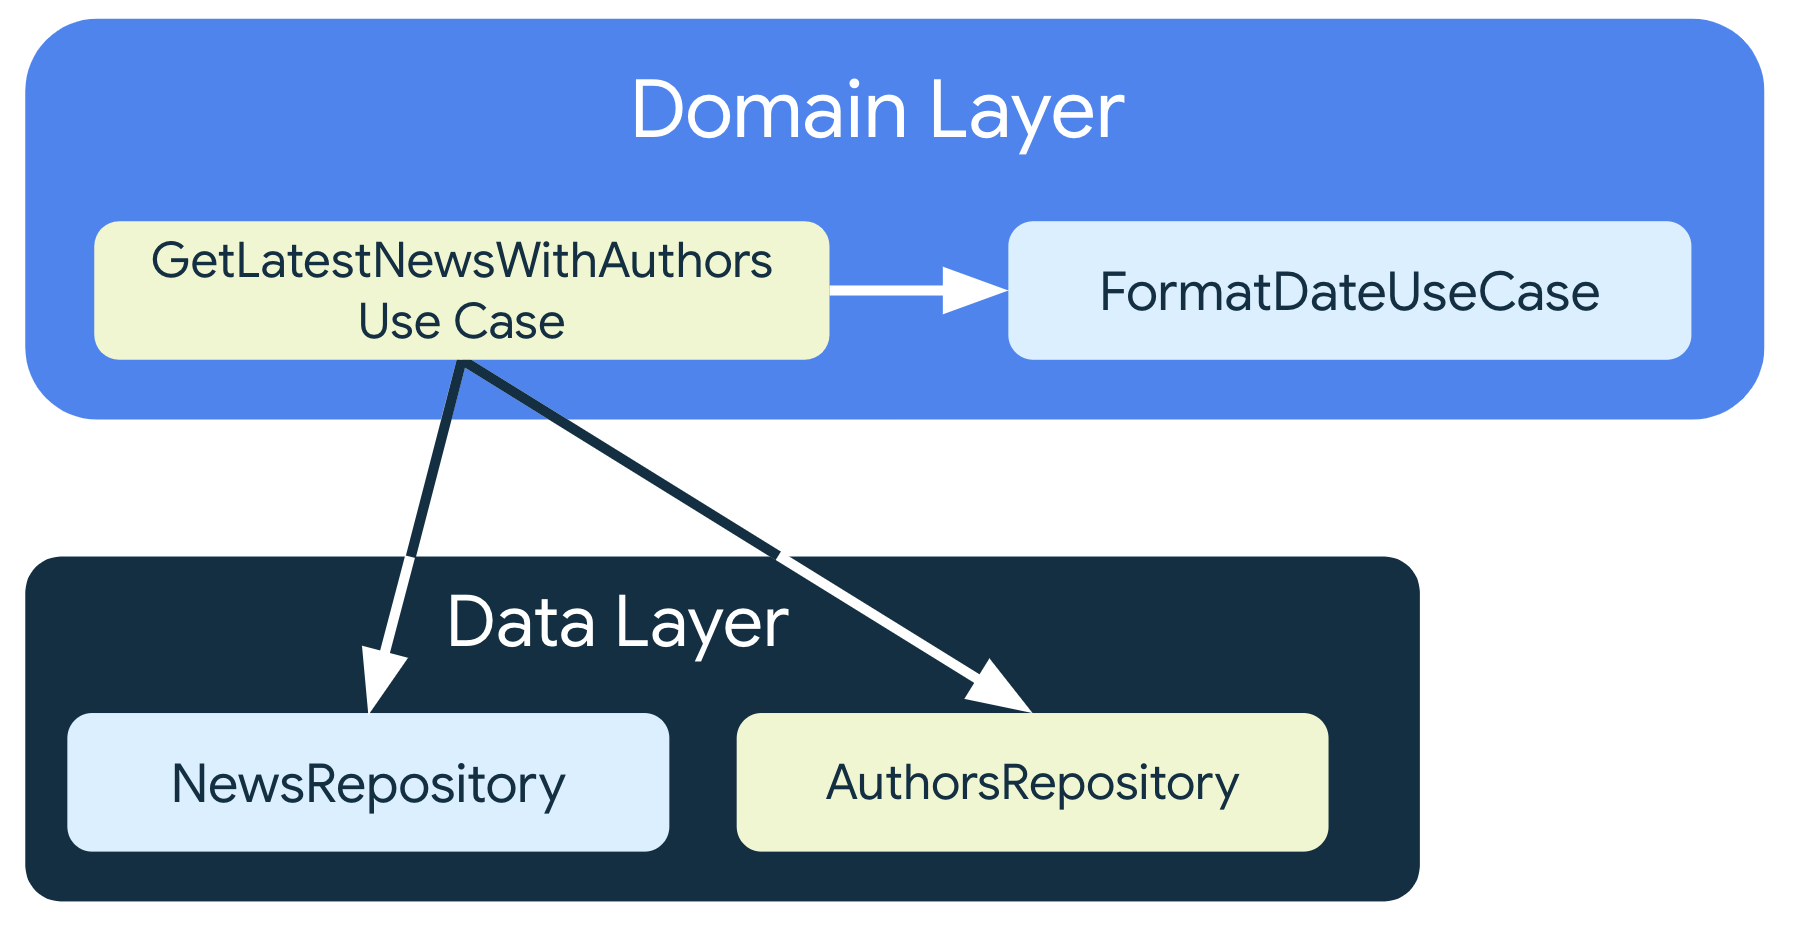 GetLatestNewsWithAuthorsUseCase 依赖于数据层中的代码库类，但它同时还依赖于同样位于网域层的另一个用例类 FormatDataUseCase。